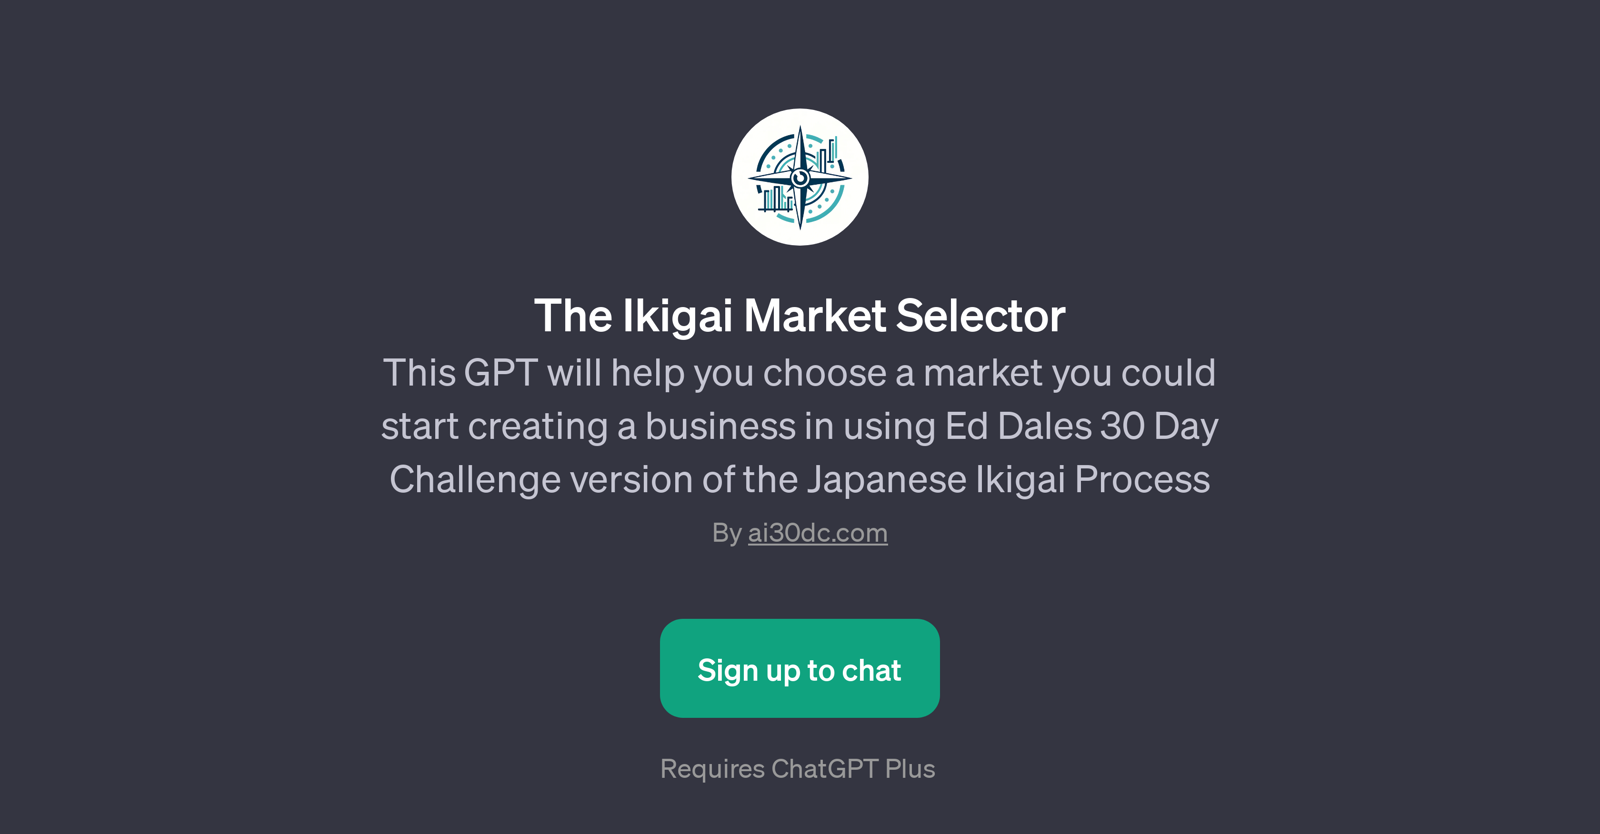 The Ikigai Market Selector website